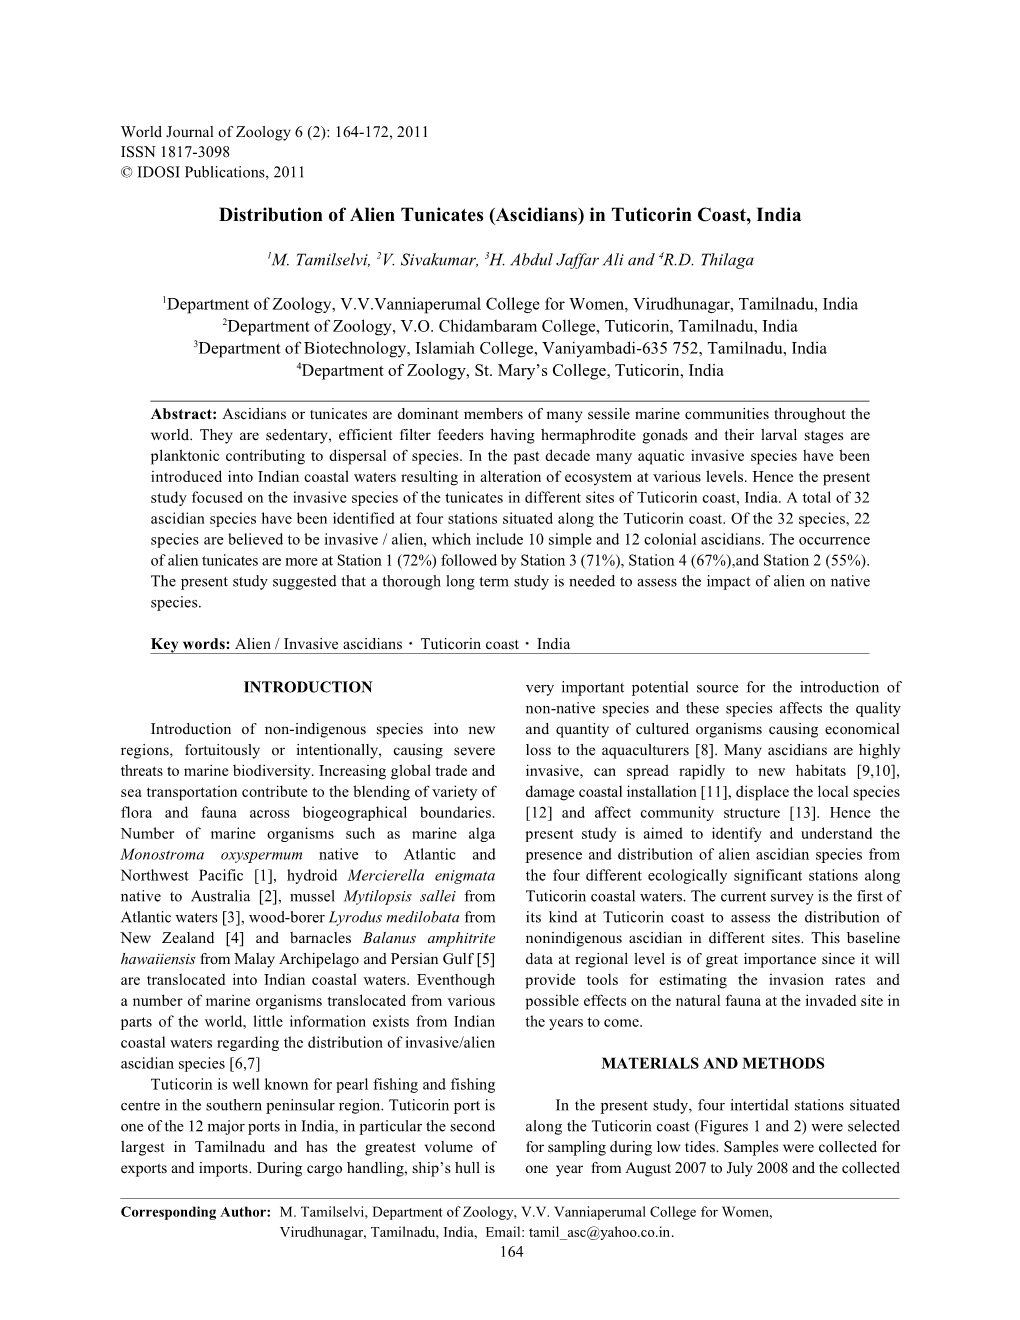 Distribution of Alien Tunicates (Ascidians) in Tuticorin Coast, India